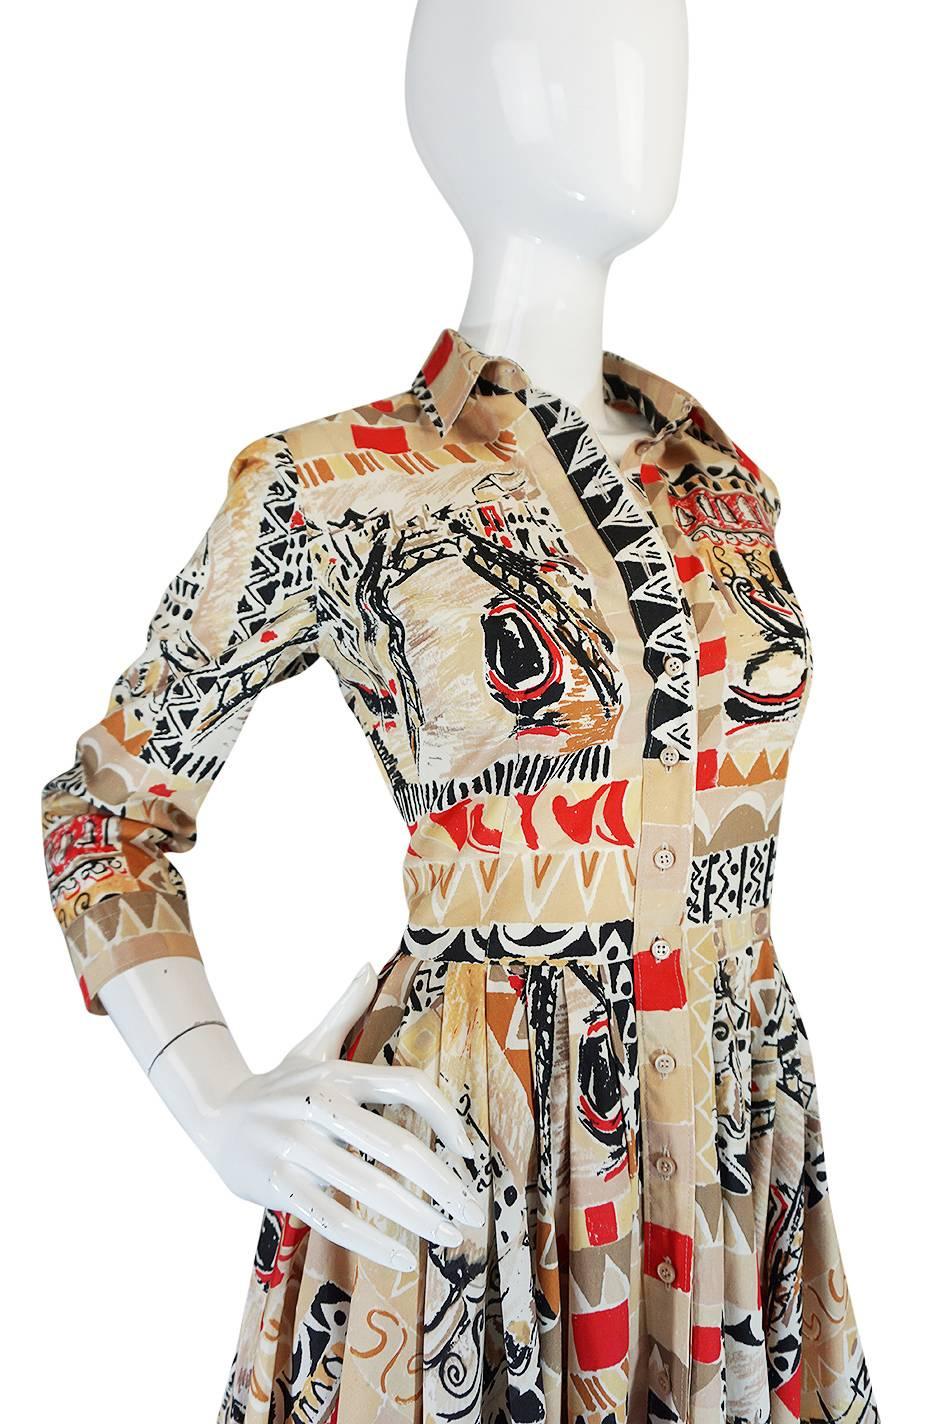 S/S 2004 Prada Runway Postcard Print Cotton Dress In Excellent Condition In Rockwood, ON